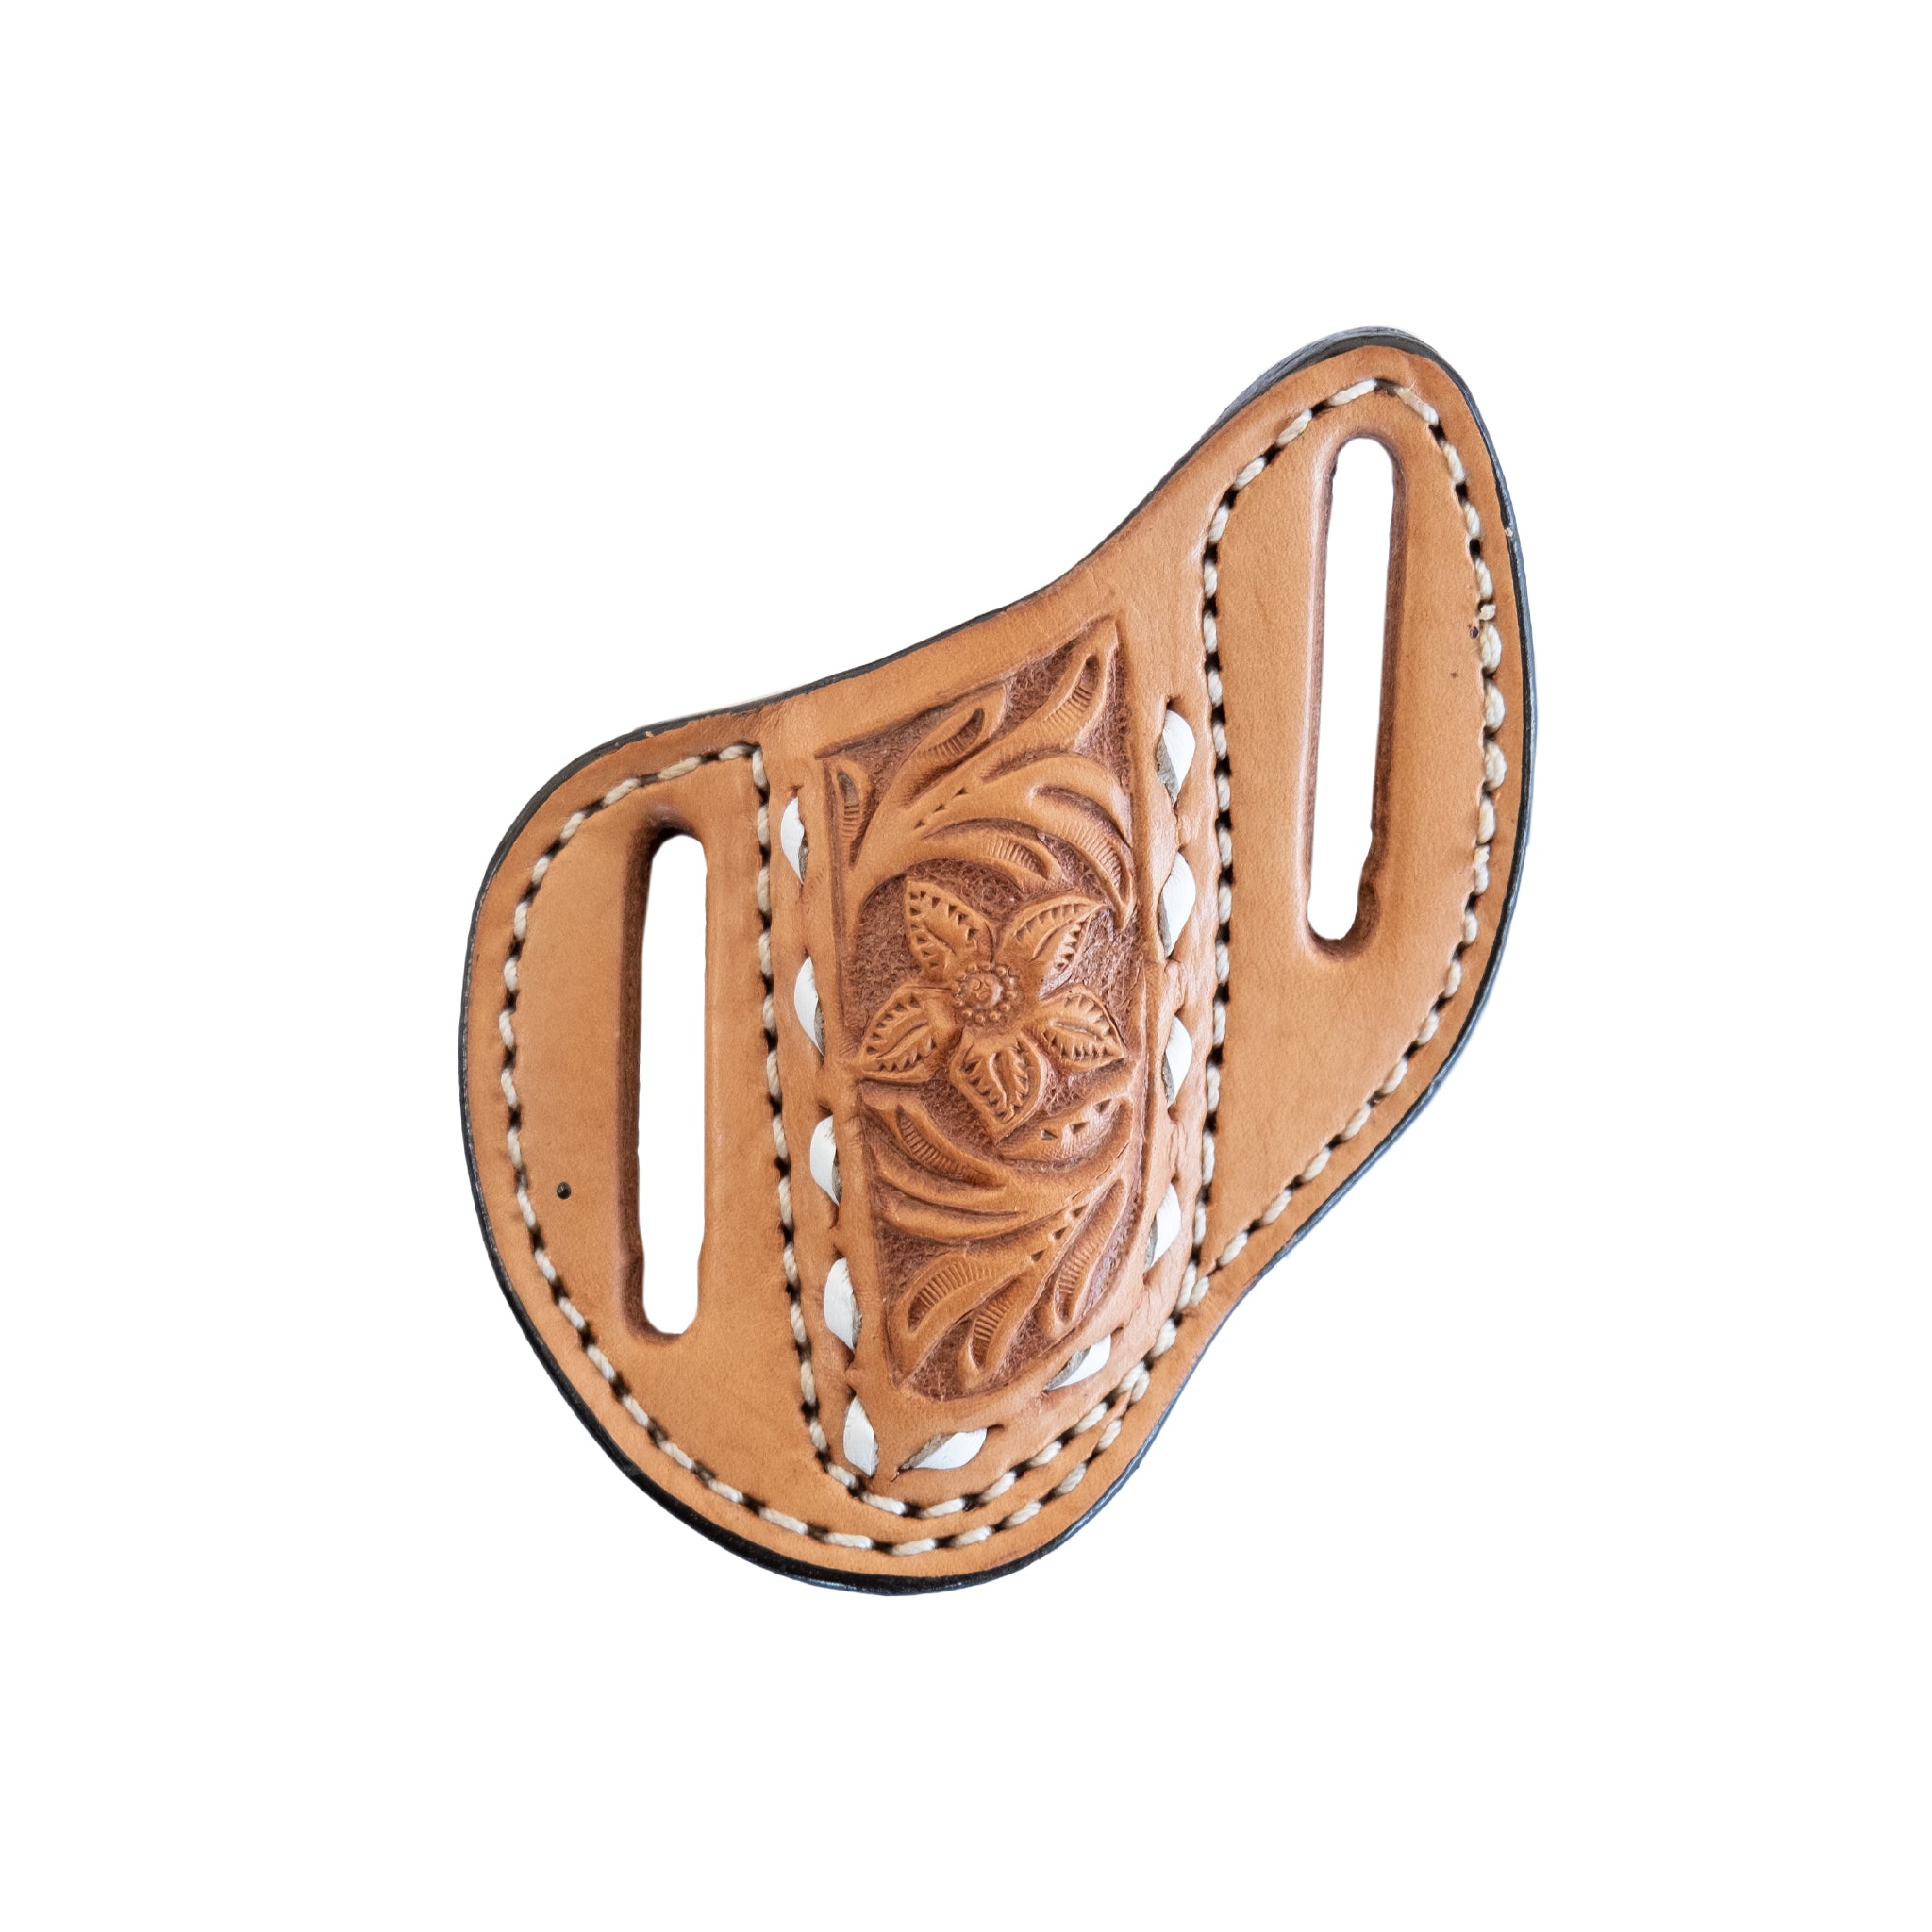 Hand Crafted Celtic Knotwork Knife Sheath by Alamo Custom Leather